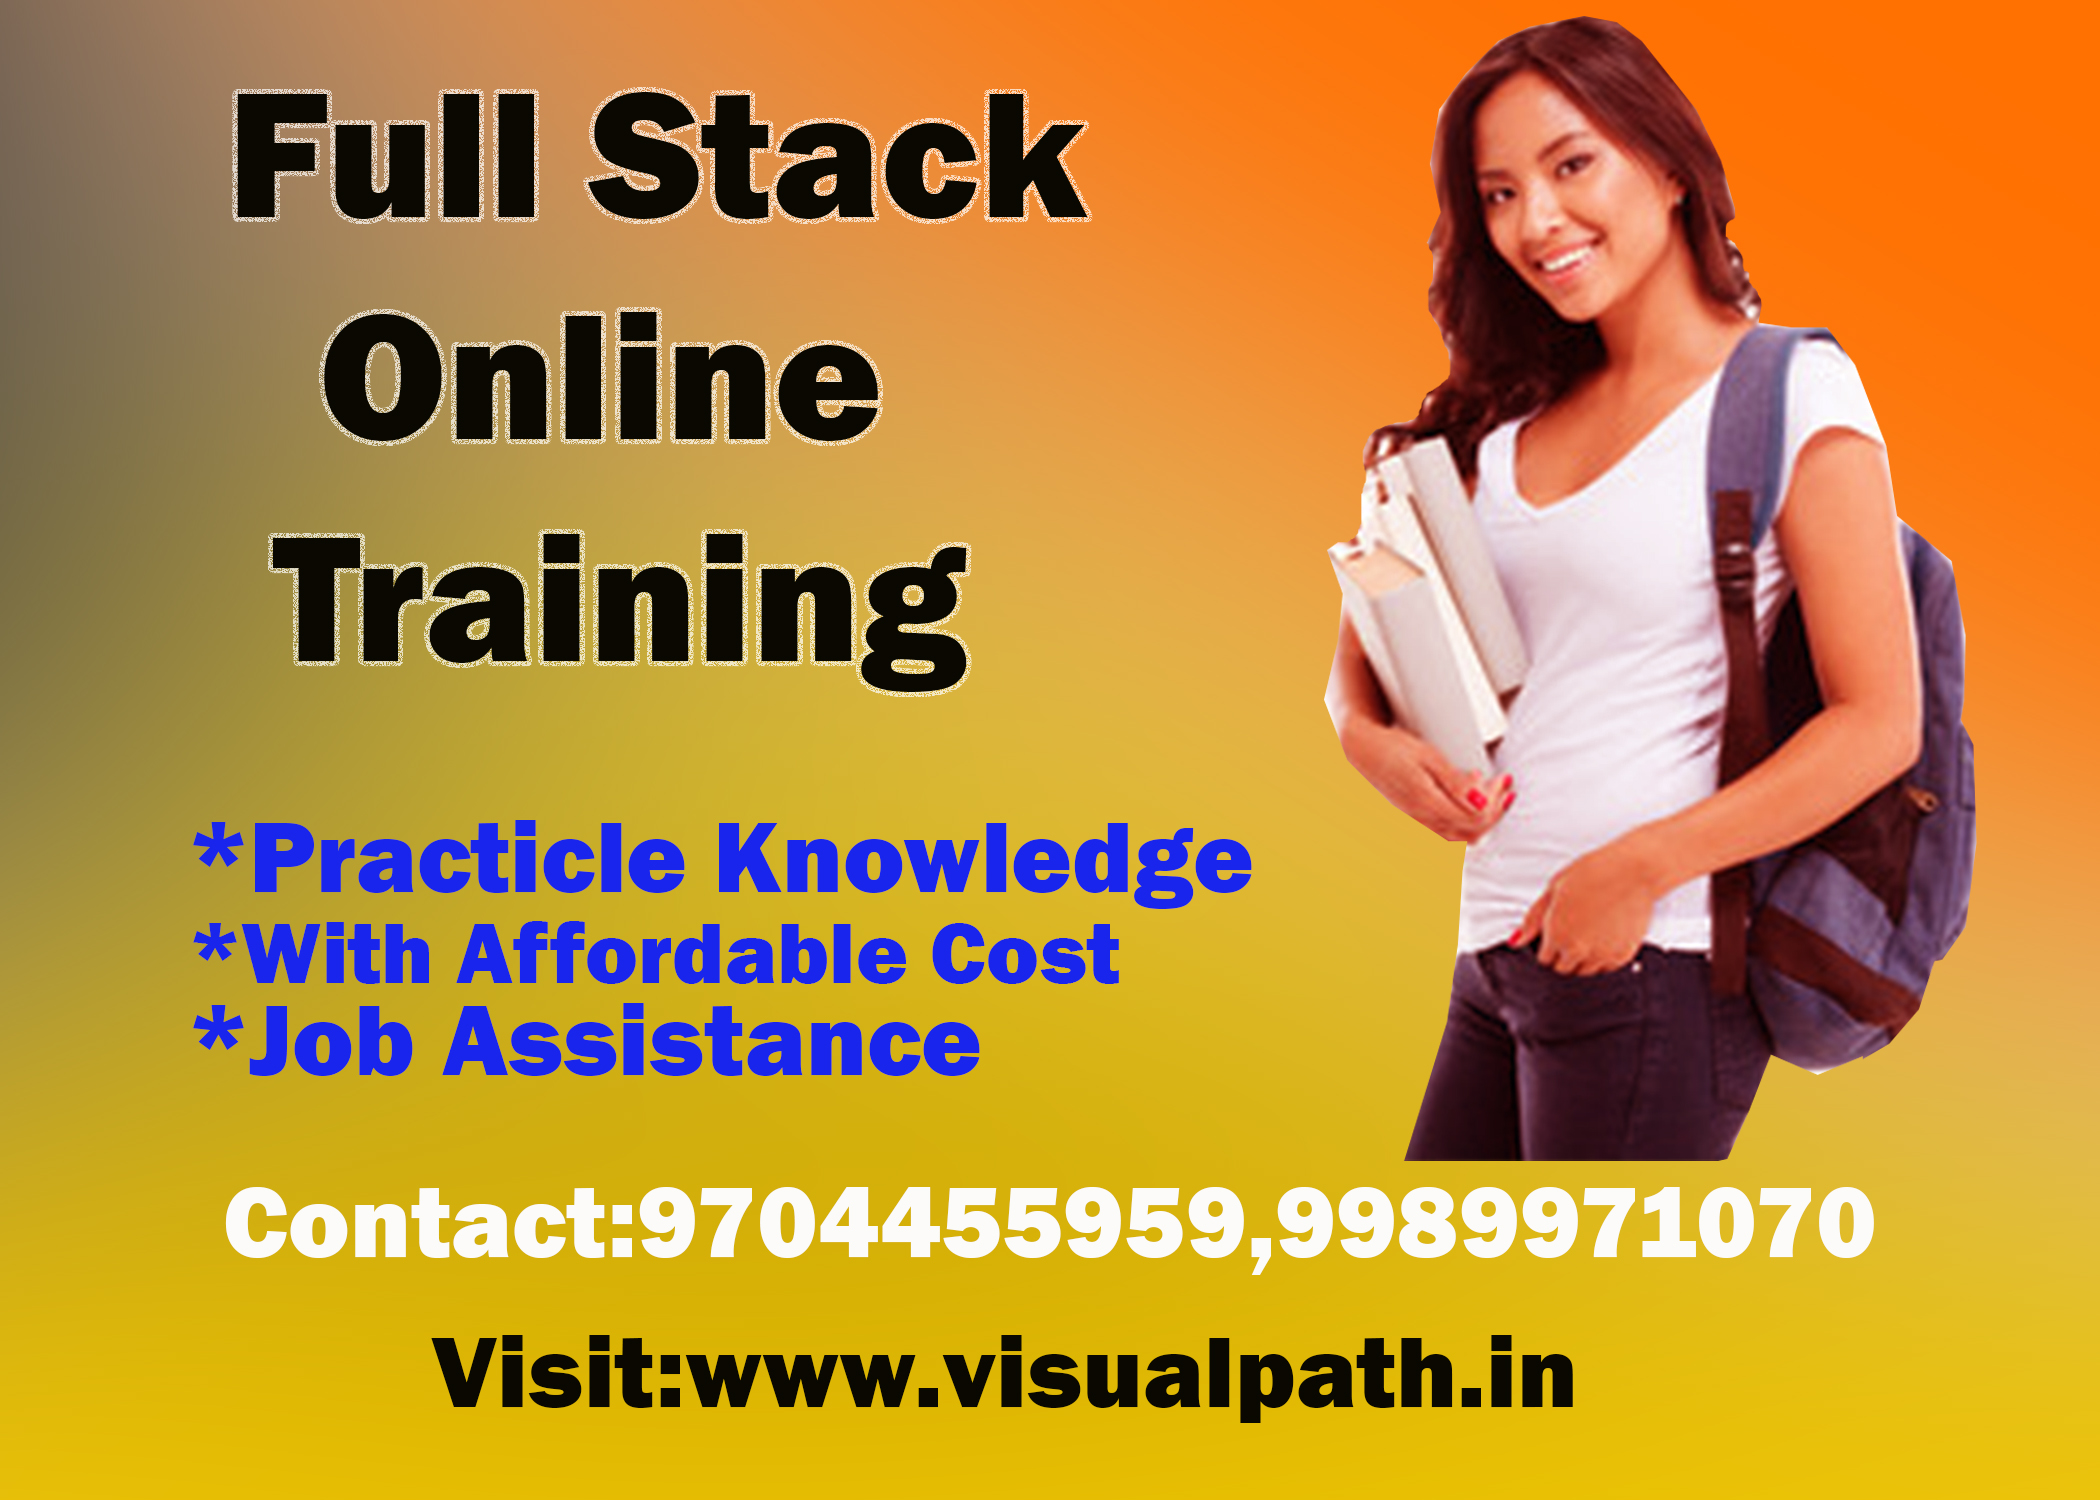 Full Stack Developer Training in Course in Hyderabad, Hyderabad, Andhra Pradesh, India